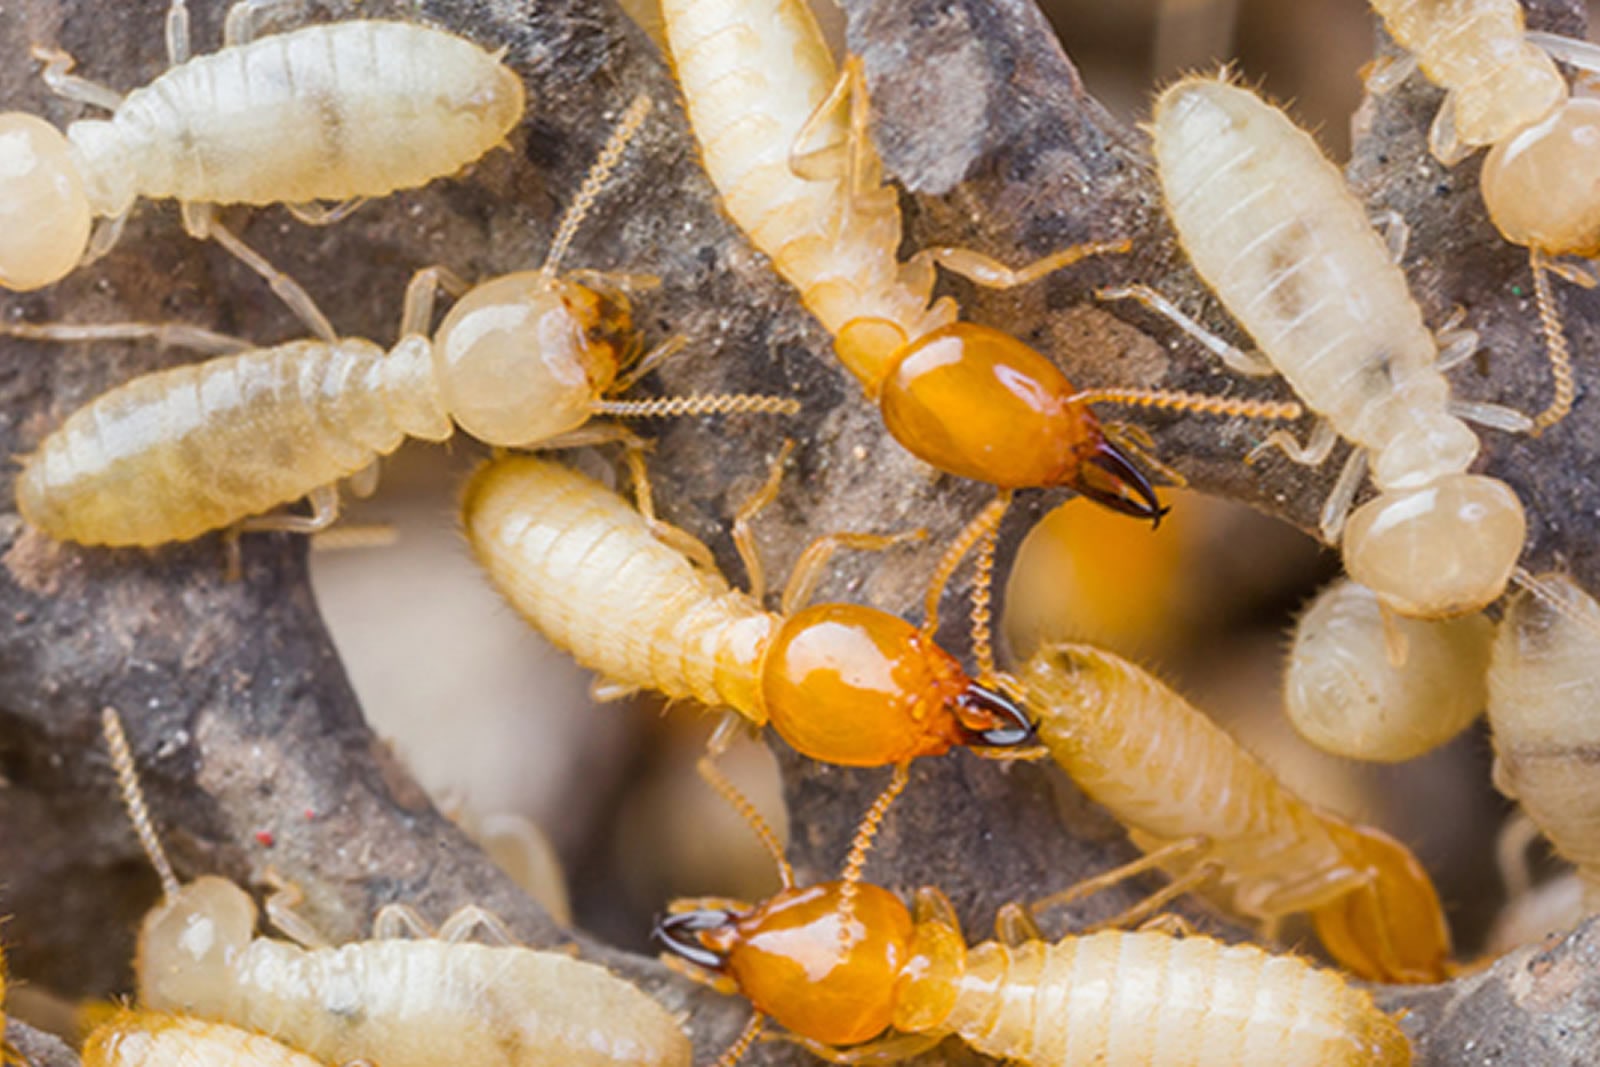 Termite Control Services in Bangladesh